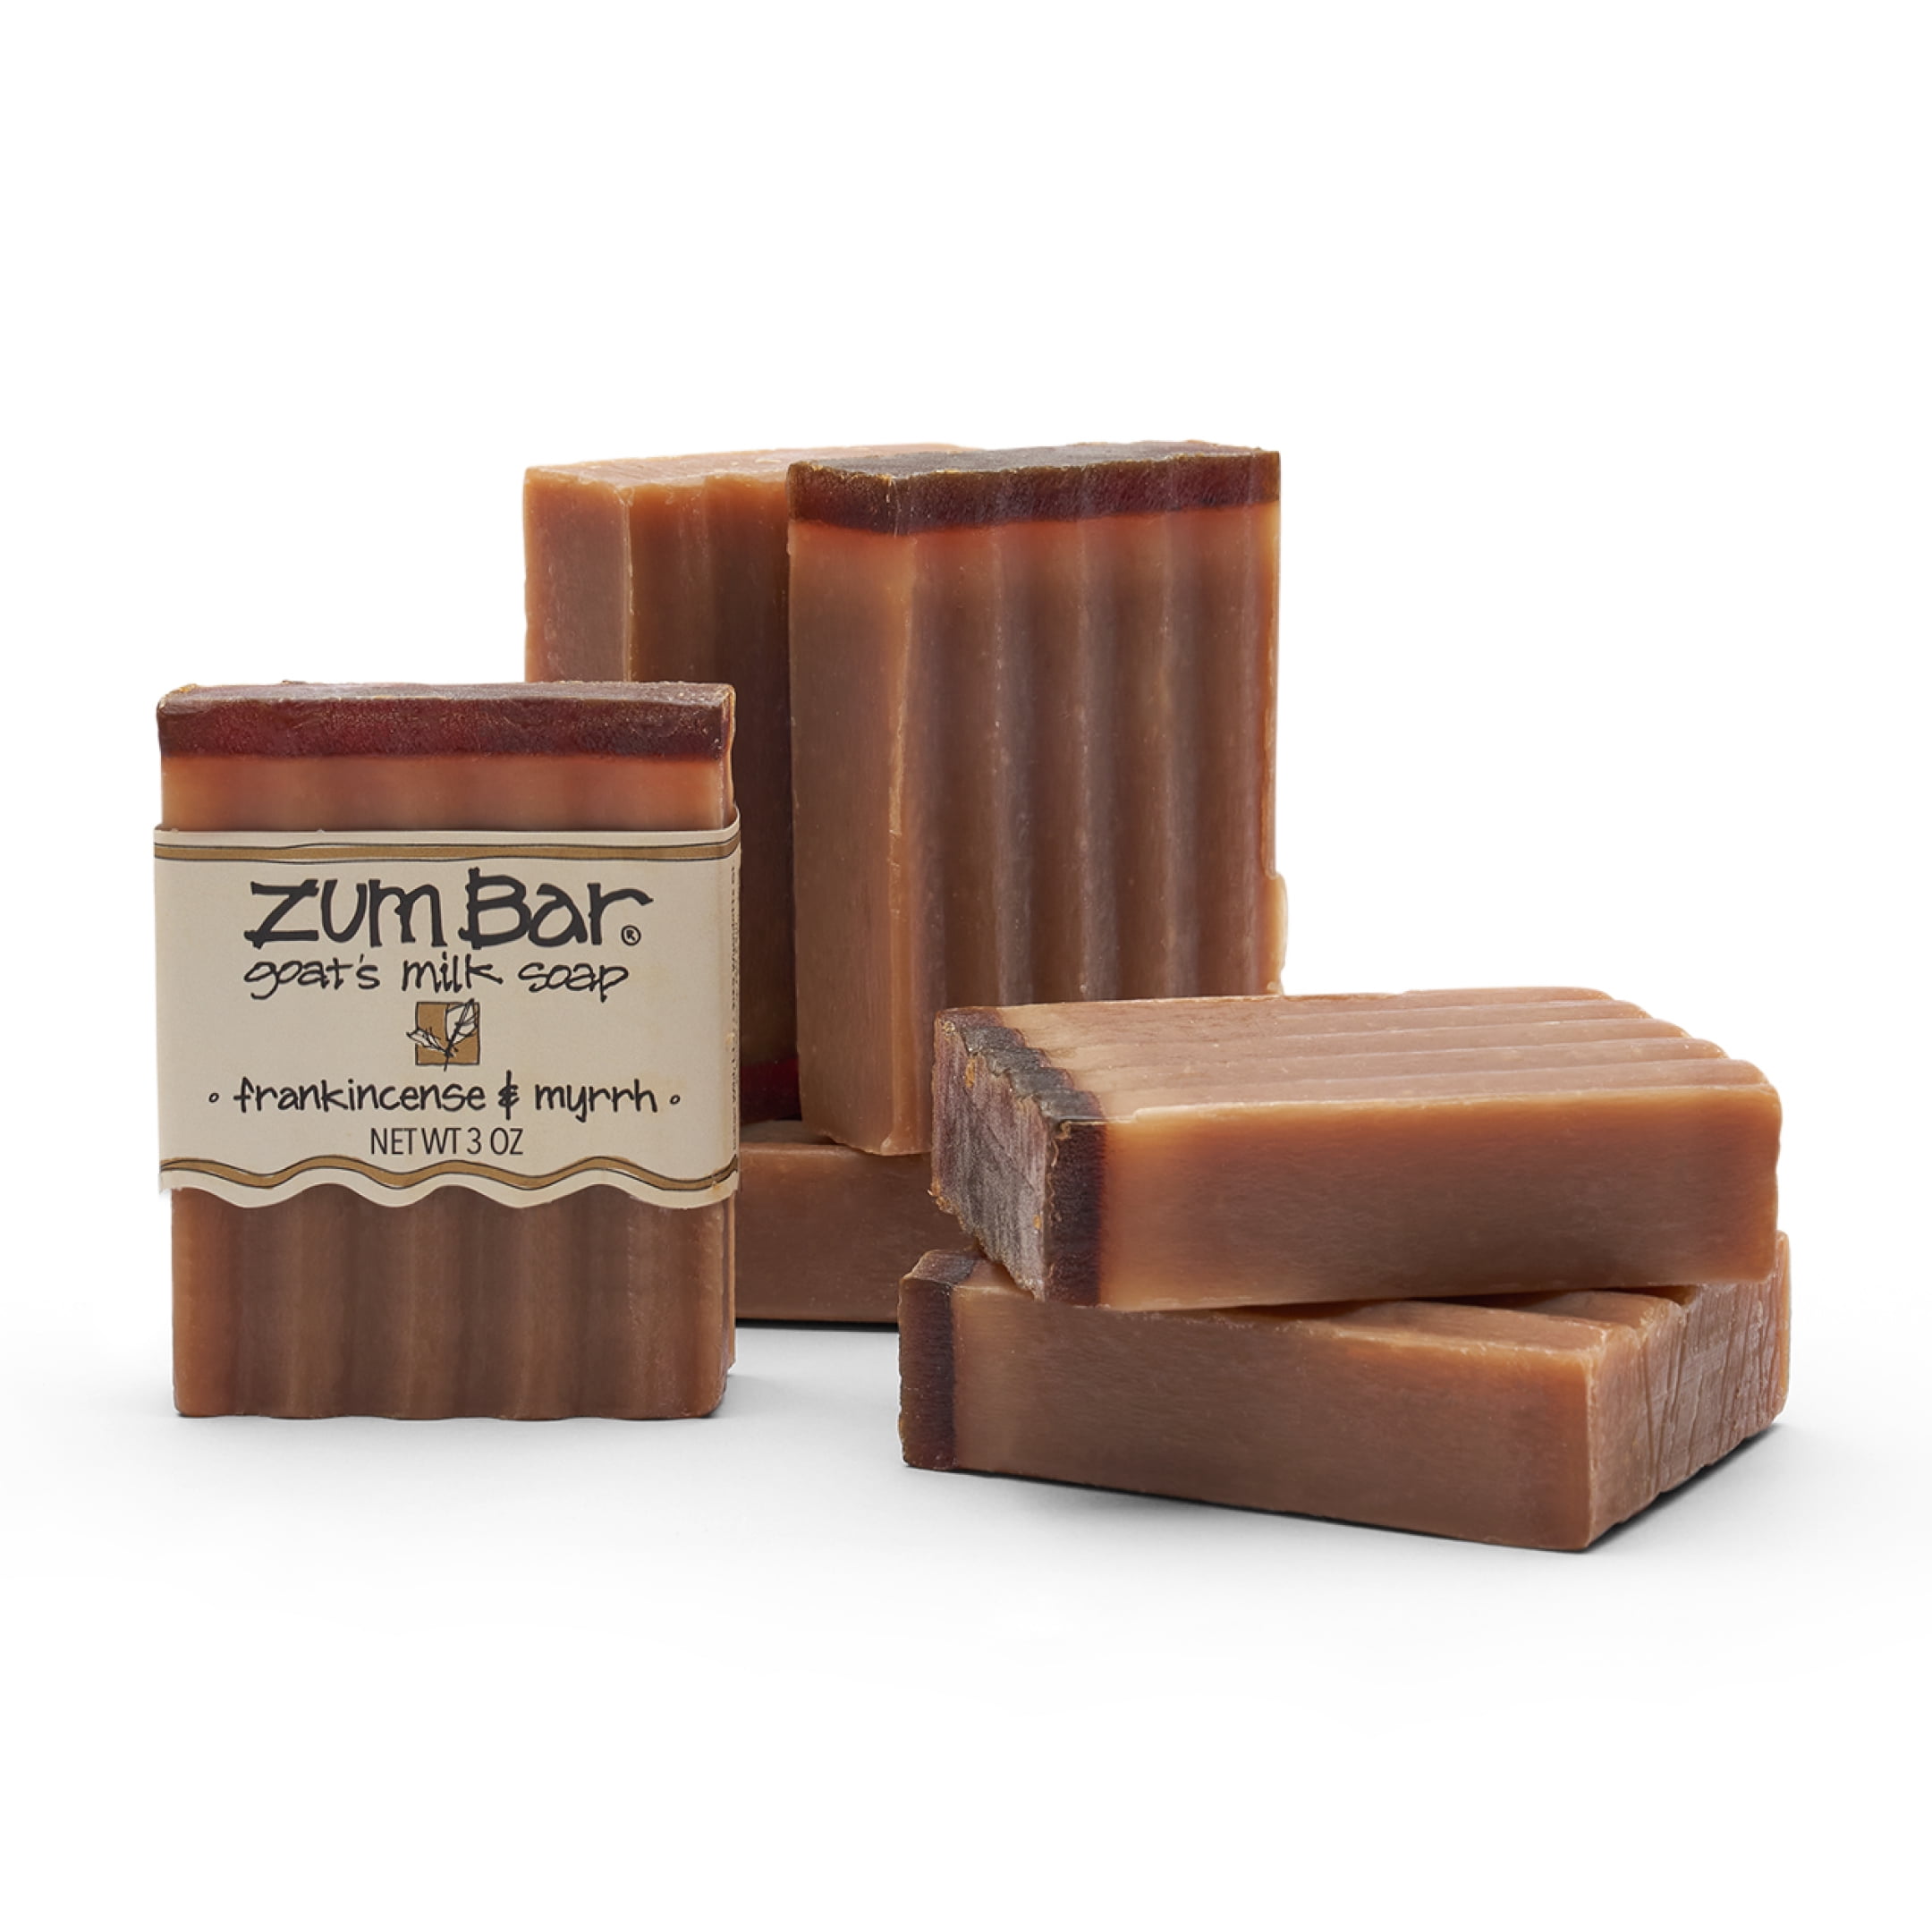 Zum Bar Goat's Milk Soap - Frankincense and Myrrh - 3 oz (6 Pack)